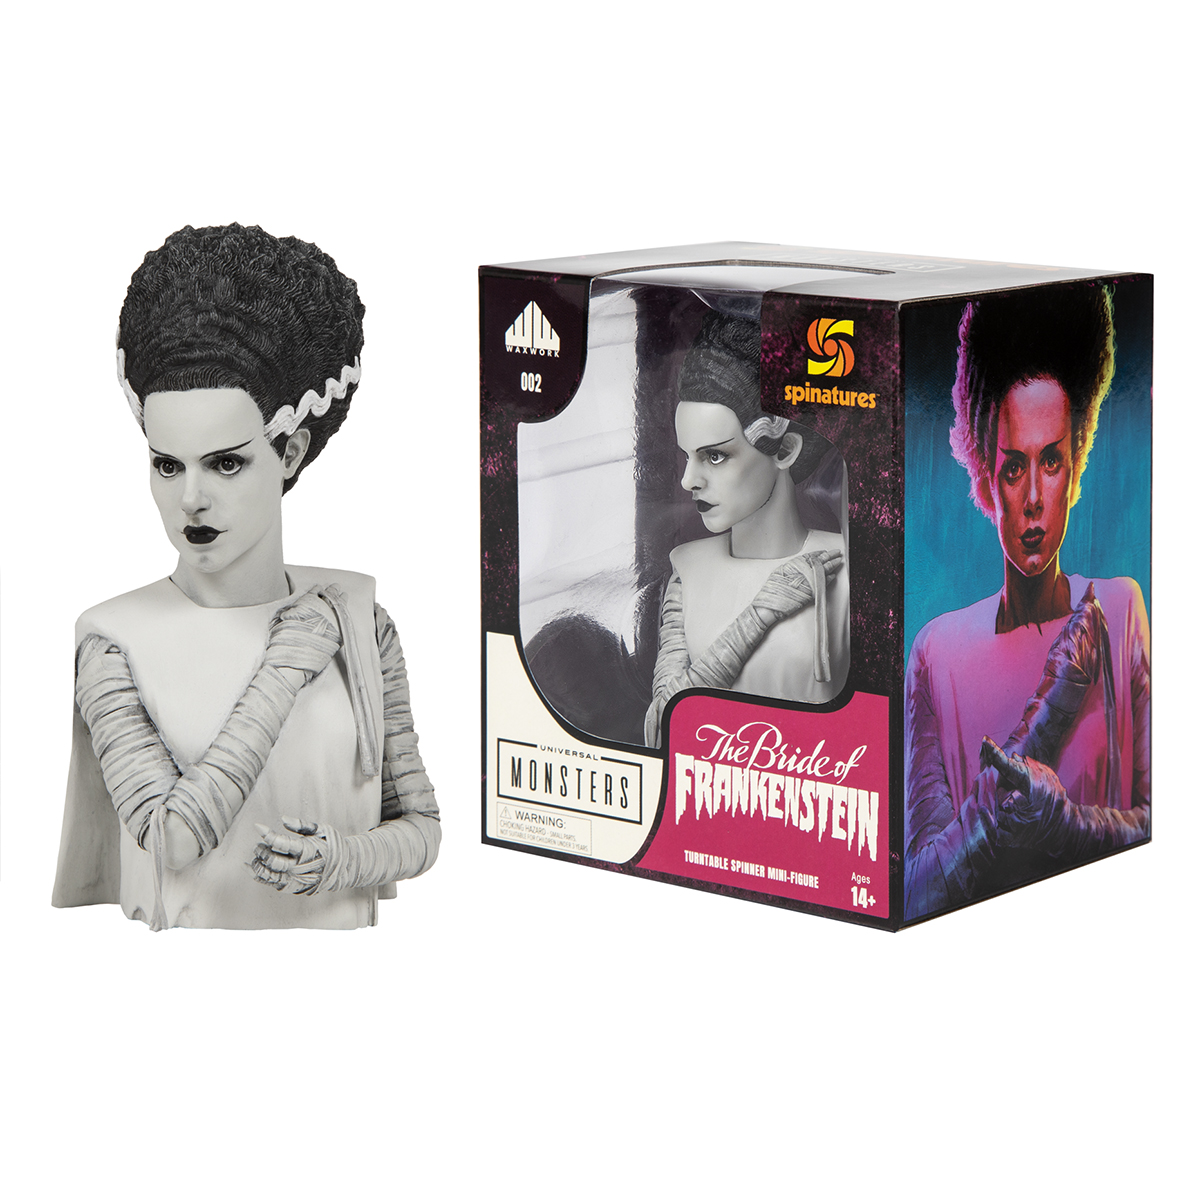 The Bride of Frankenstein Gets Waxwork Vinyl Release and New Spinature Figurine